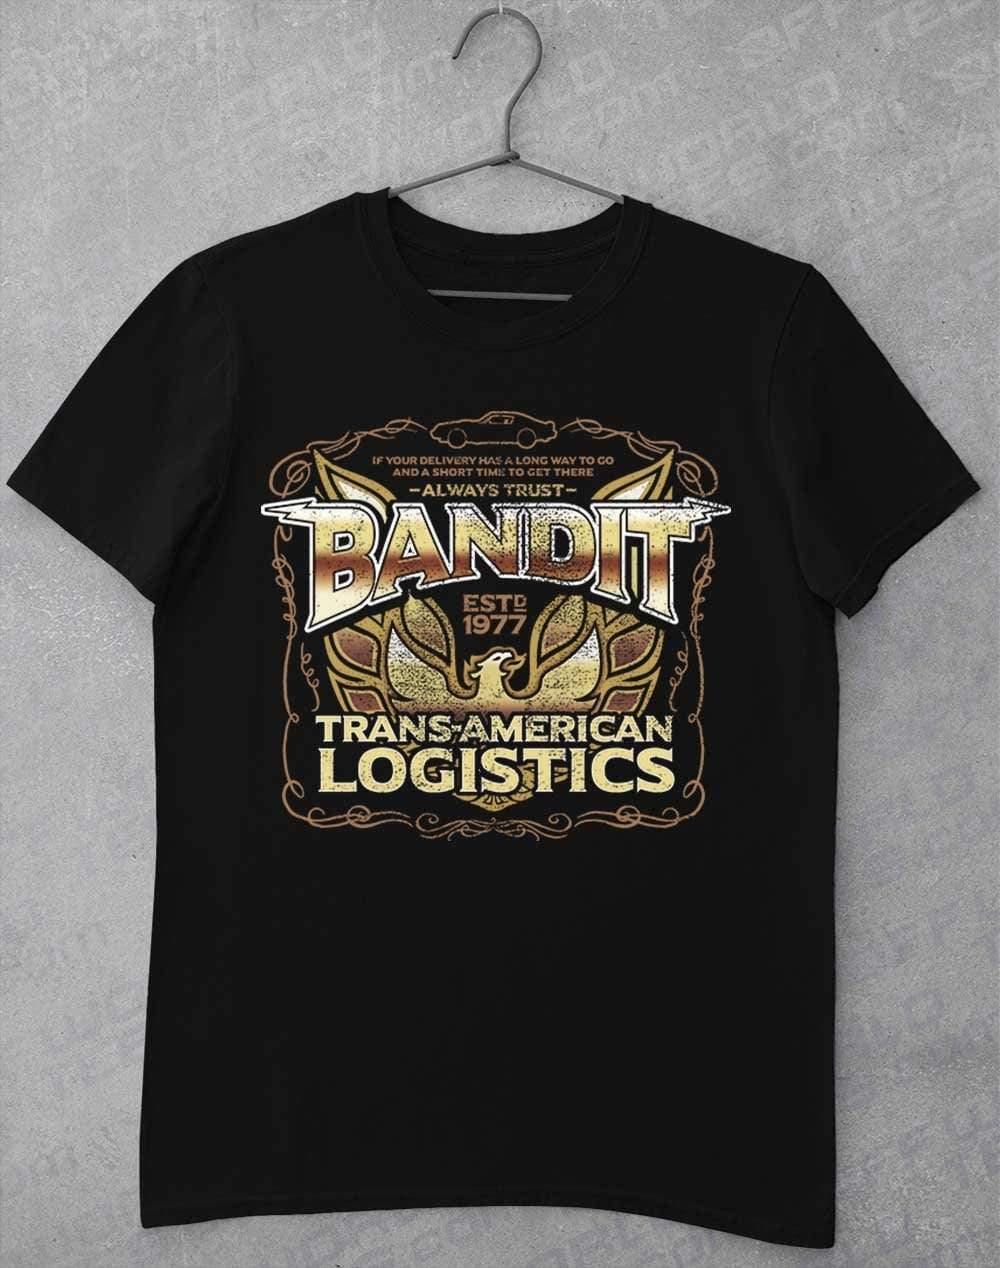 Bandit Logistics 1977 T-Shirt S / Black  - Off World Tees